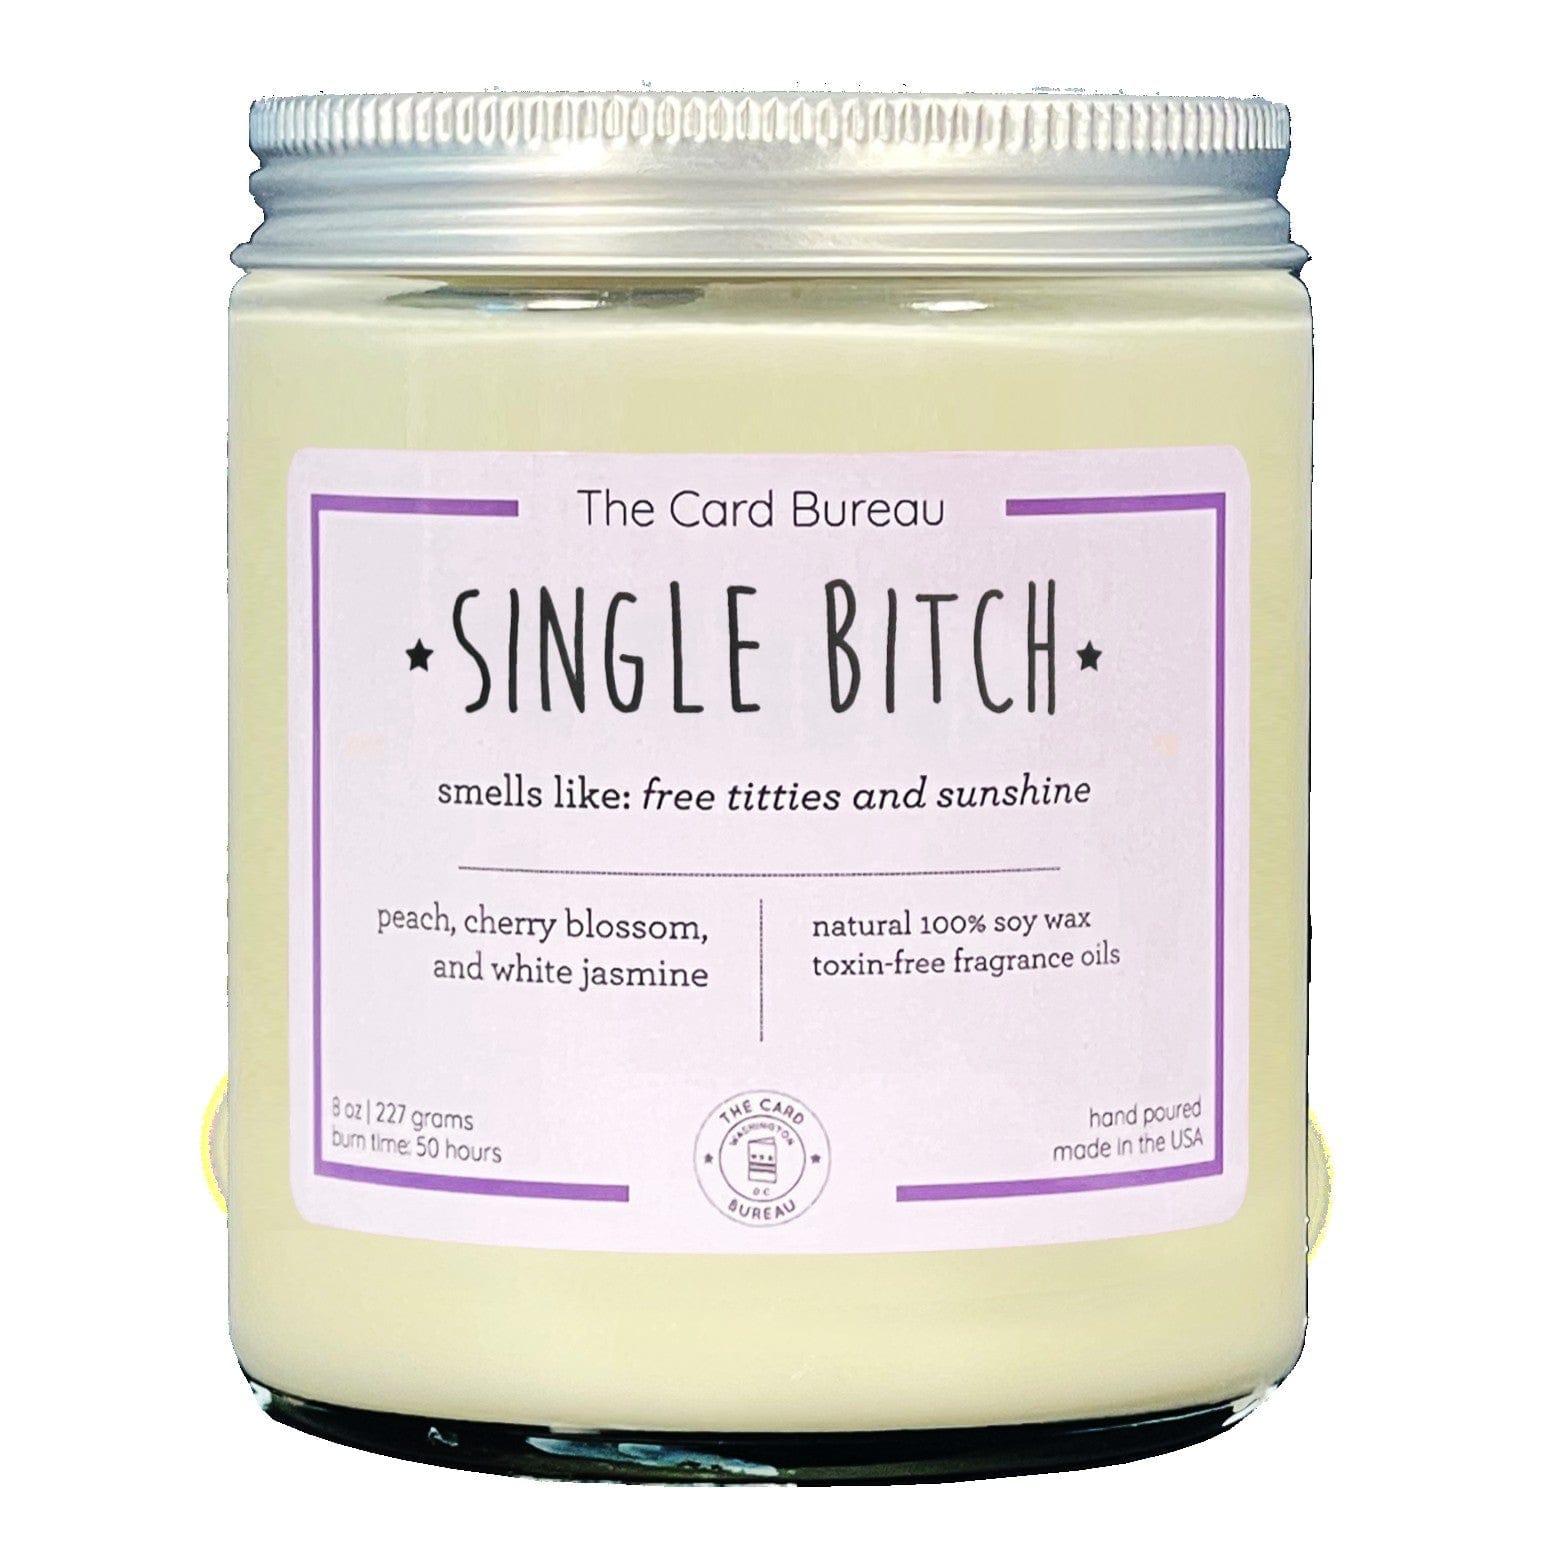 Single Bitch Candle Novelty 24.95 MPGD Corp Merchandise